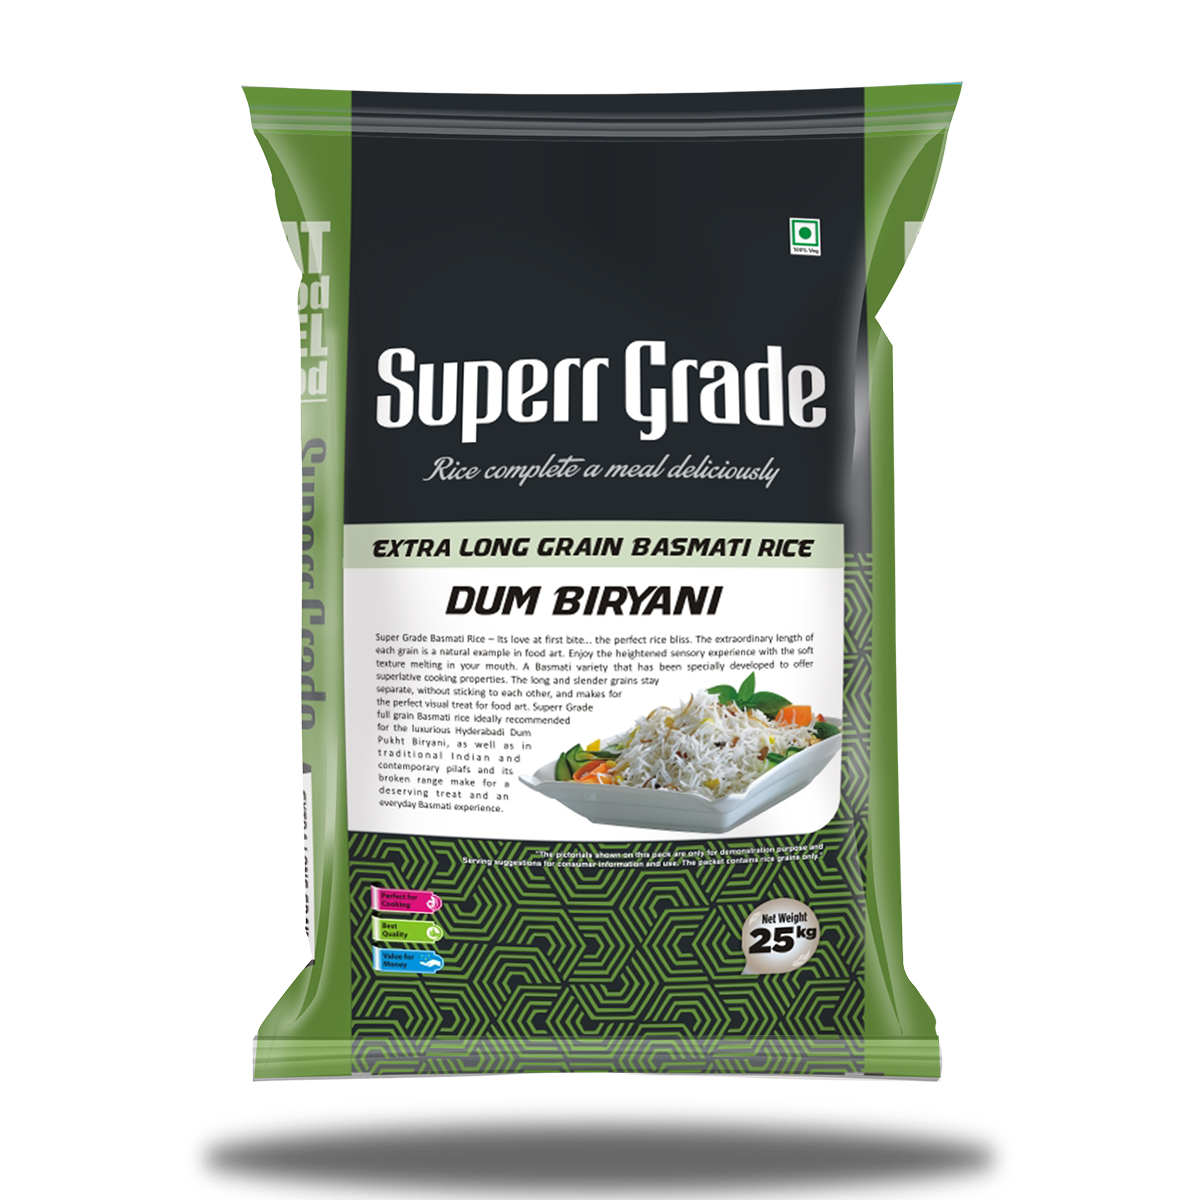 Super Grade Dum Biryani